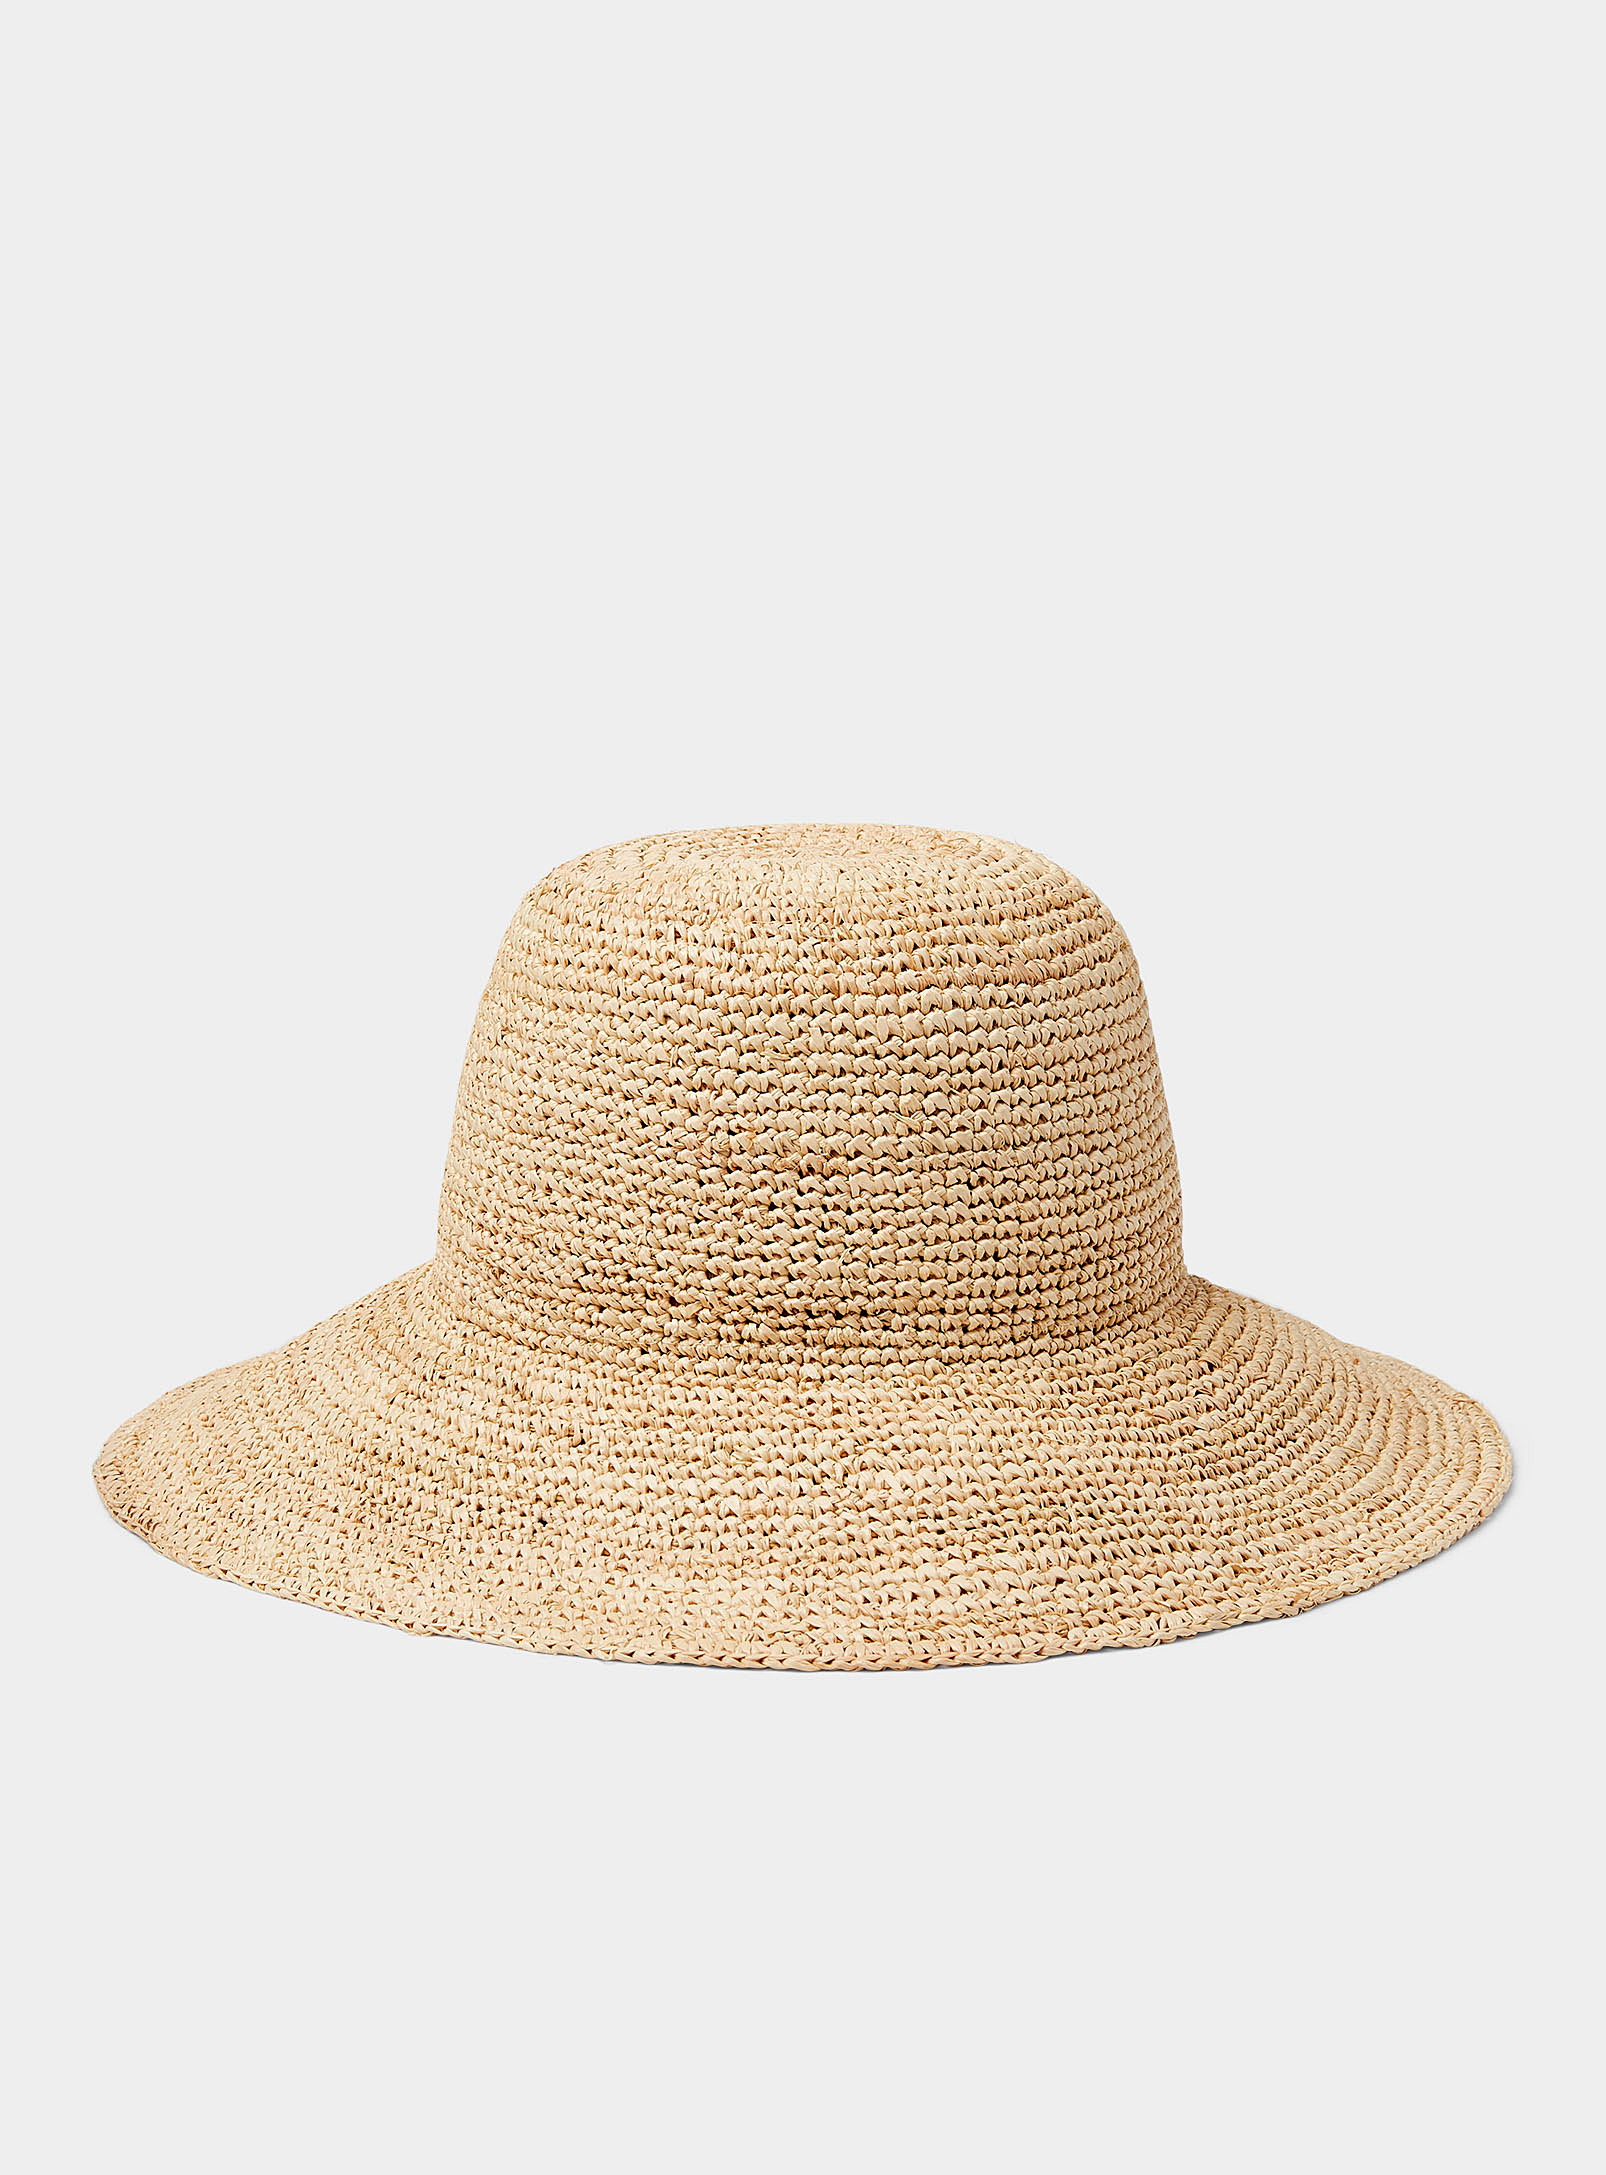 Simons - Women's Natural straw Cloche Hat